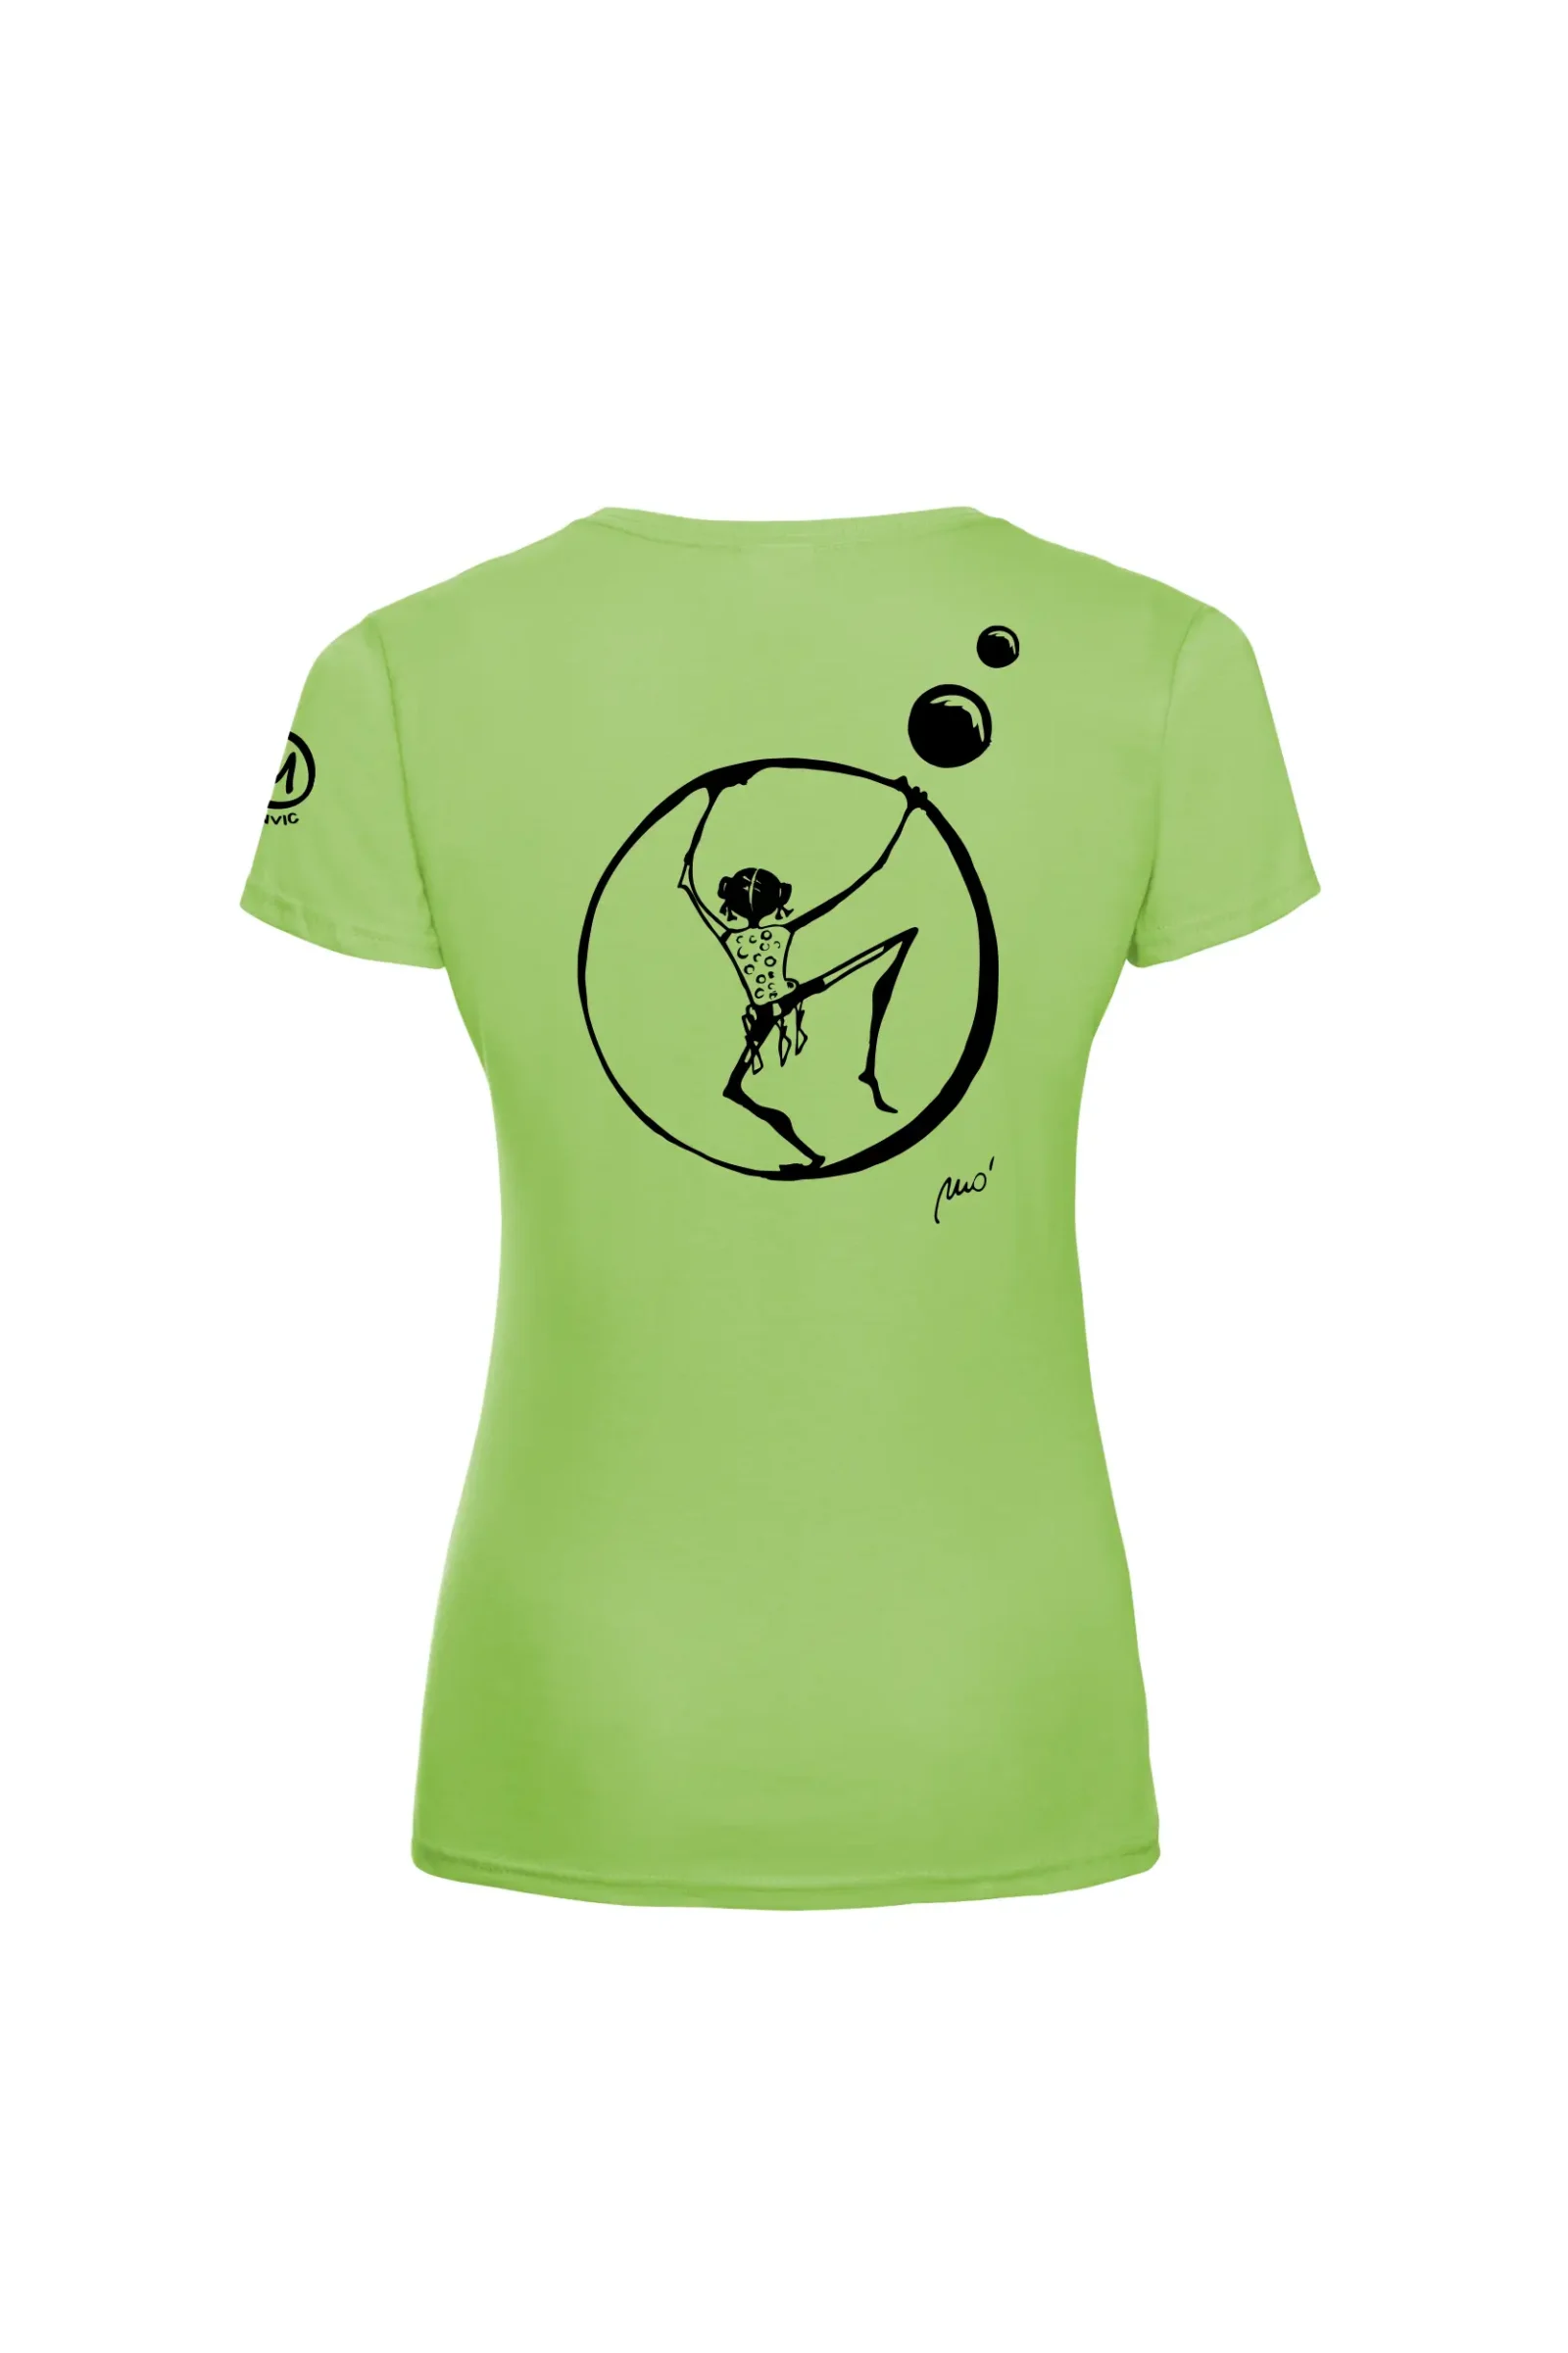 T-shirt escalade femme - coton vert anis - graphisme "Vierge" - SHARON by MONVIC